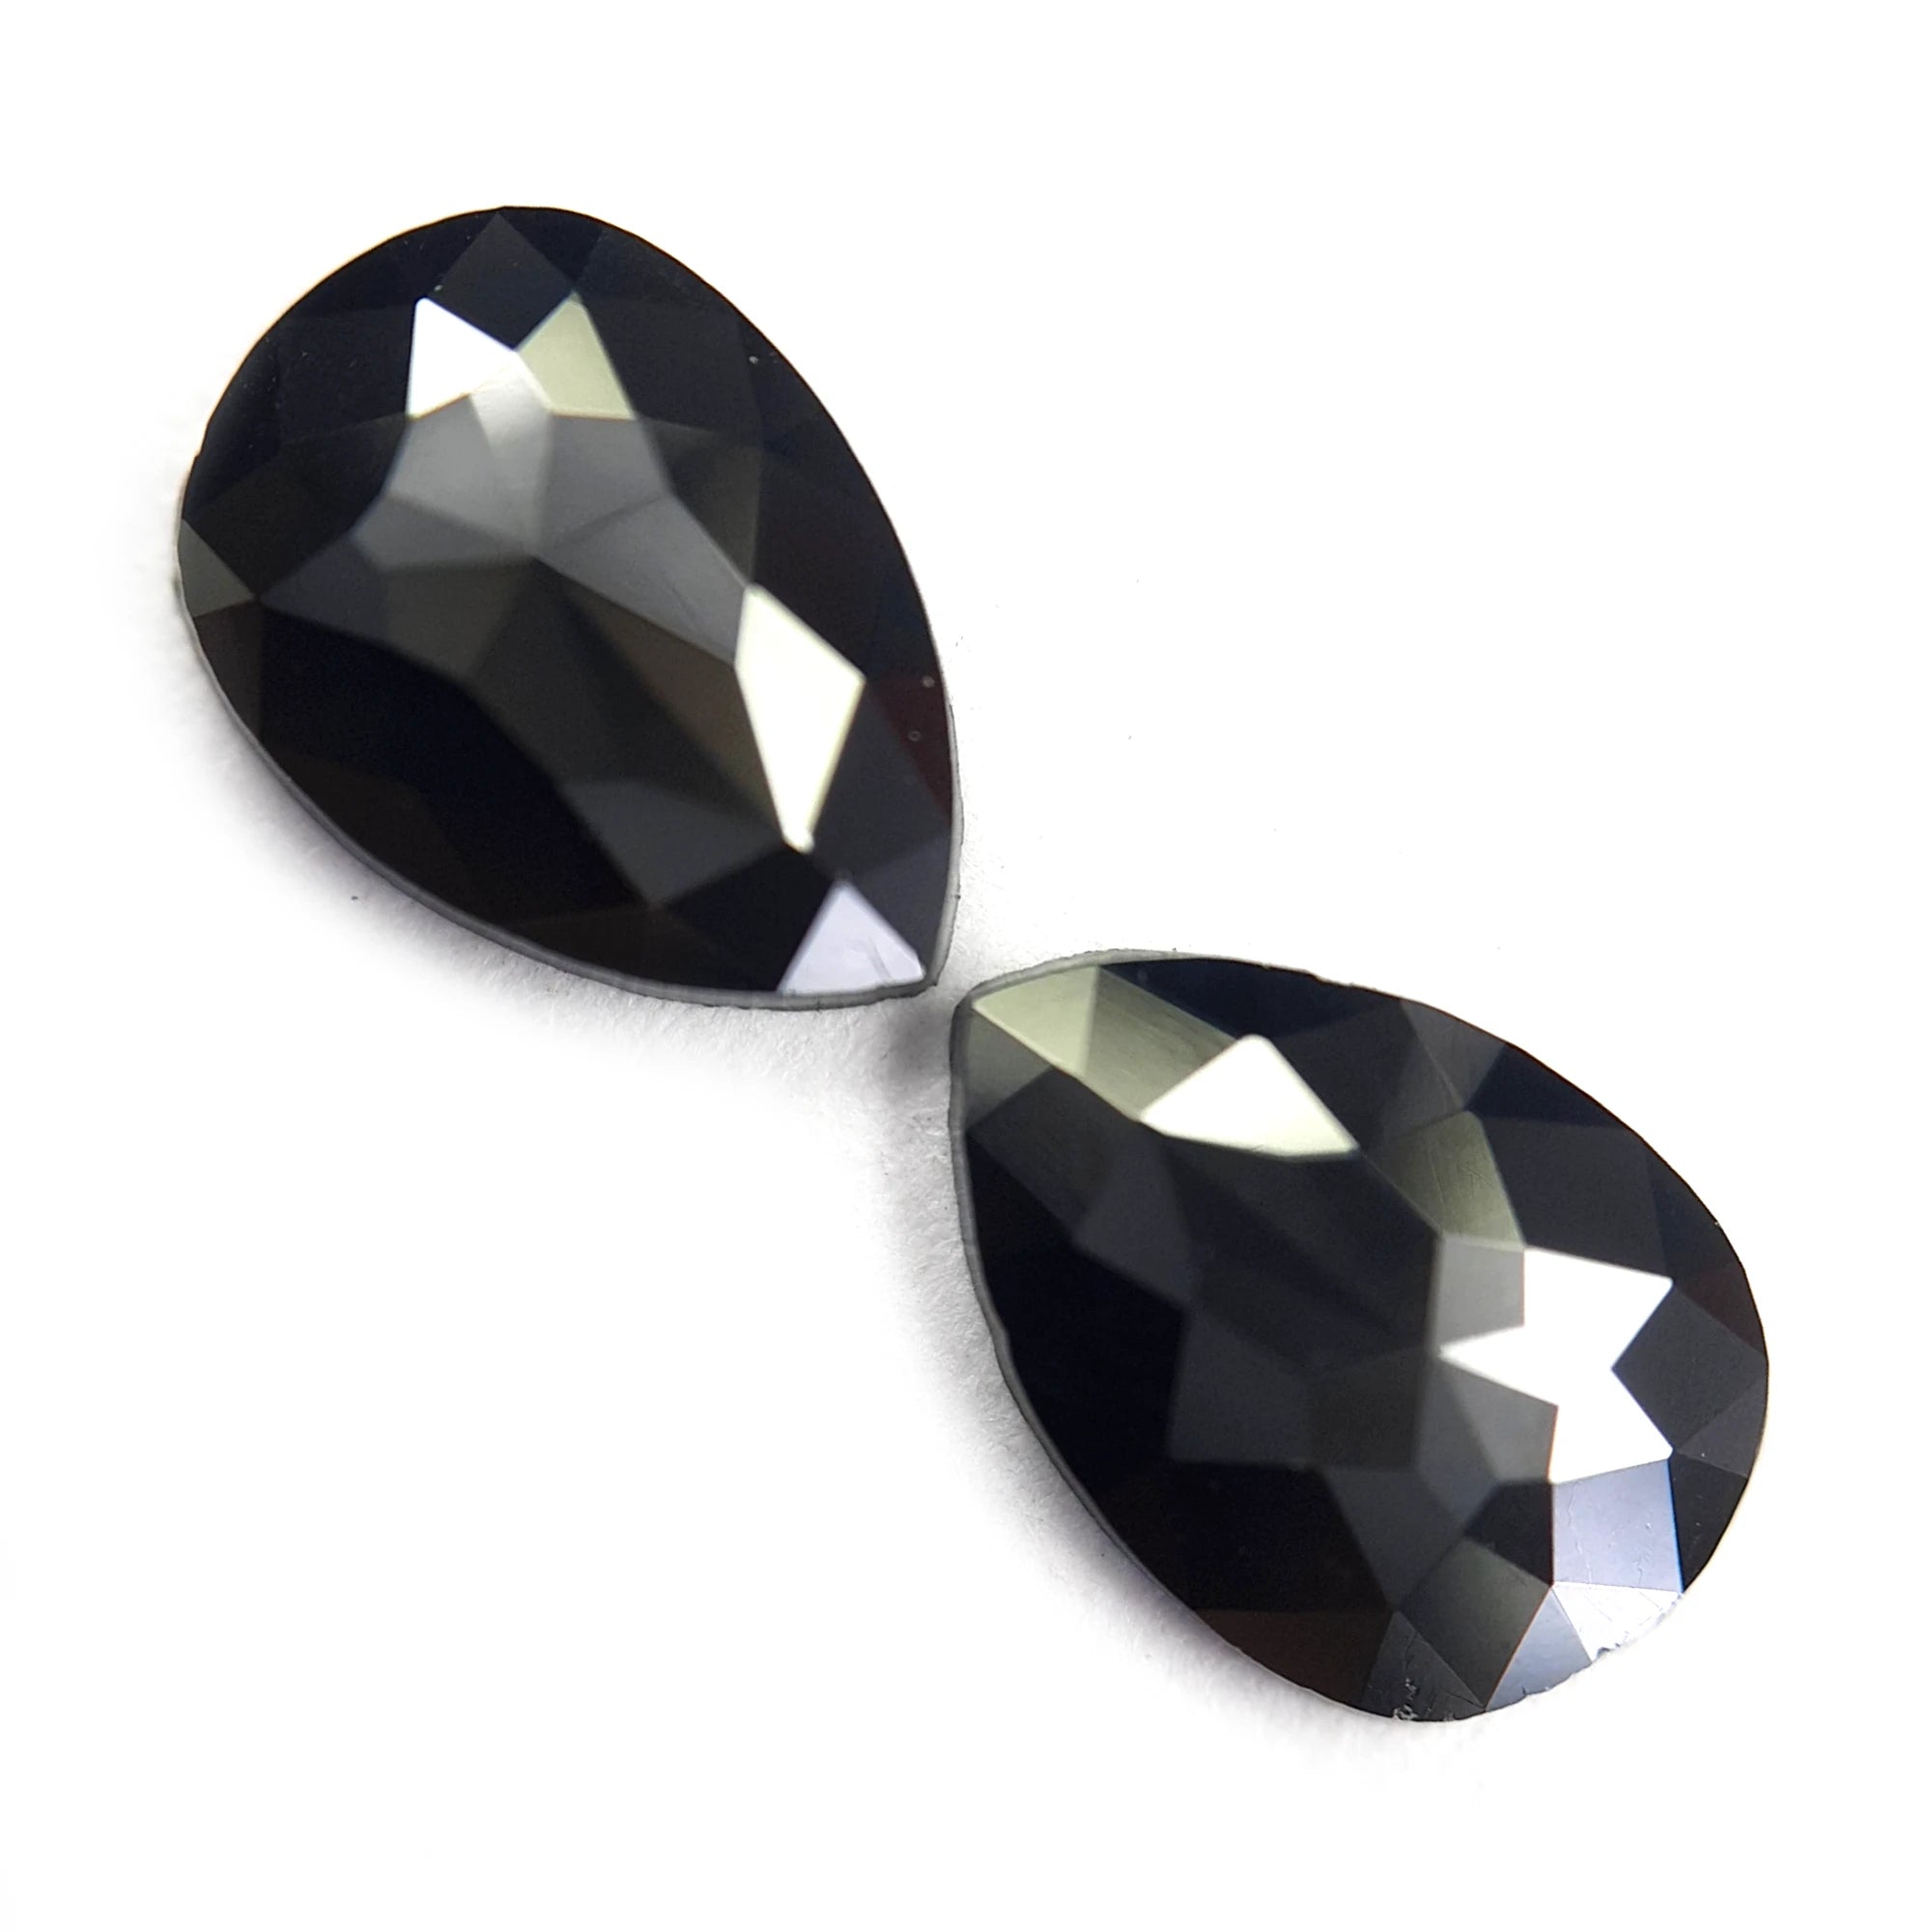 Pear Cut Black Diamond